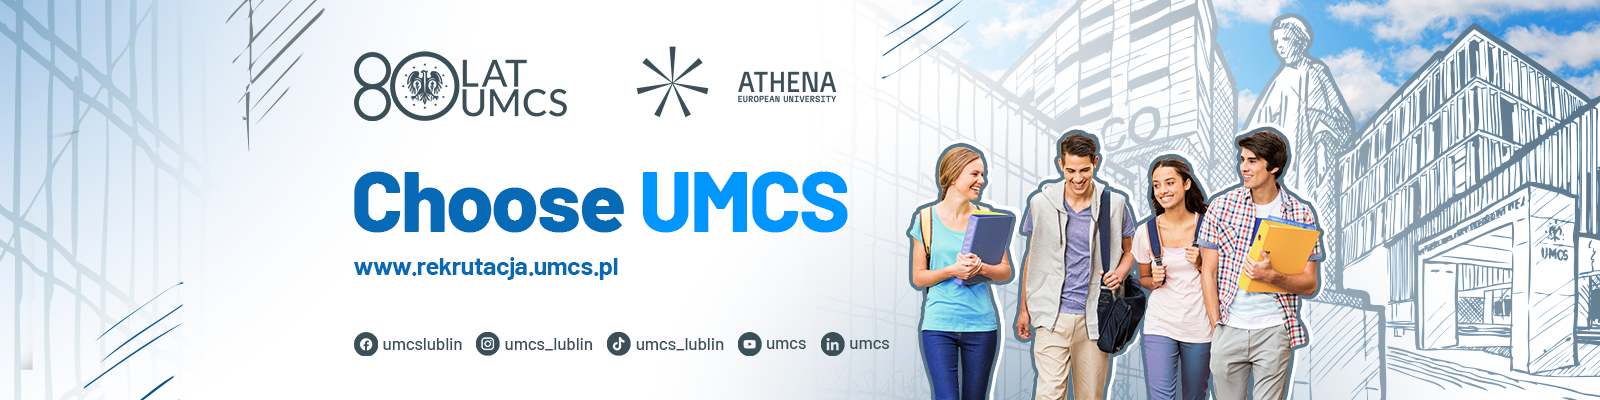 Choose UMCS!